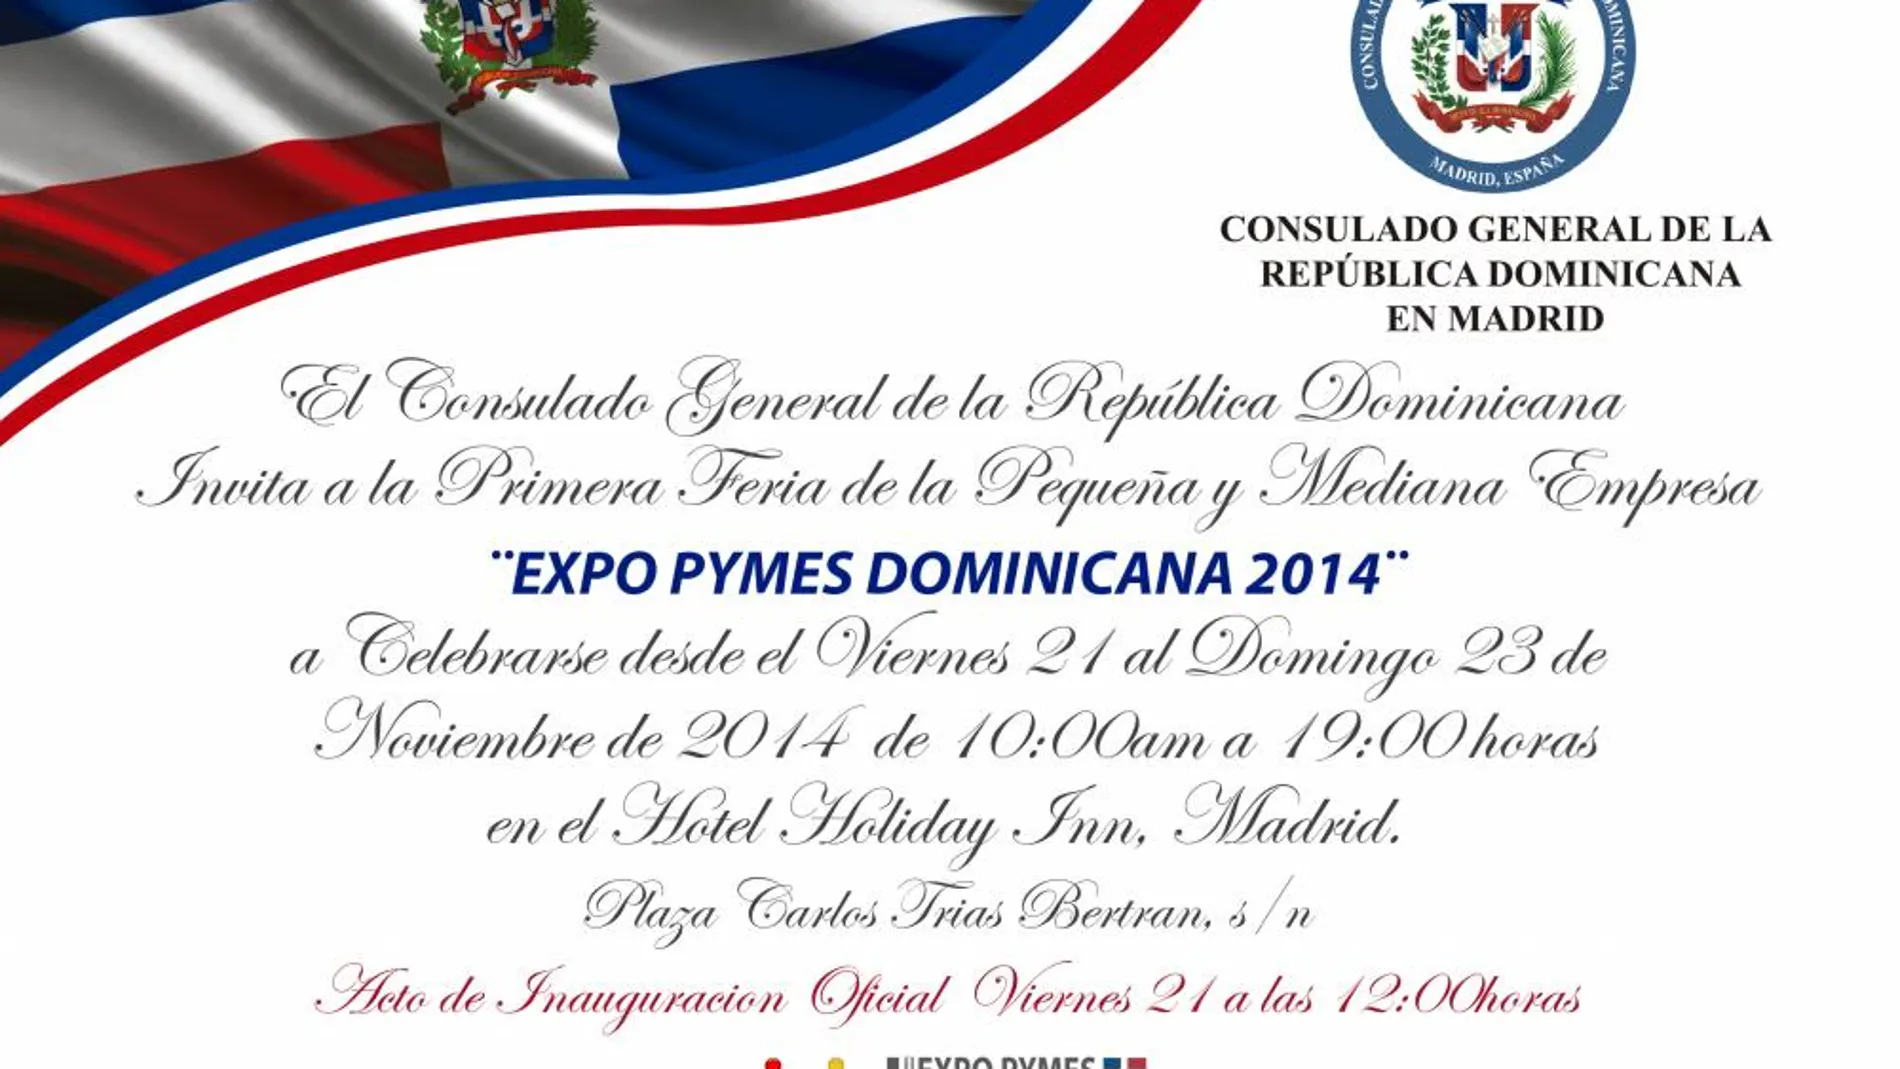 Expo Pymes Dominicana en Madrid